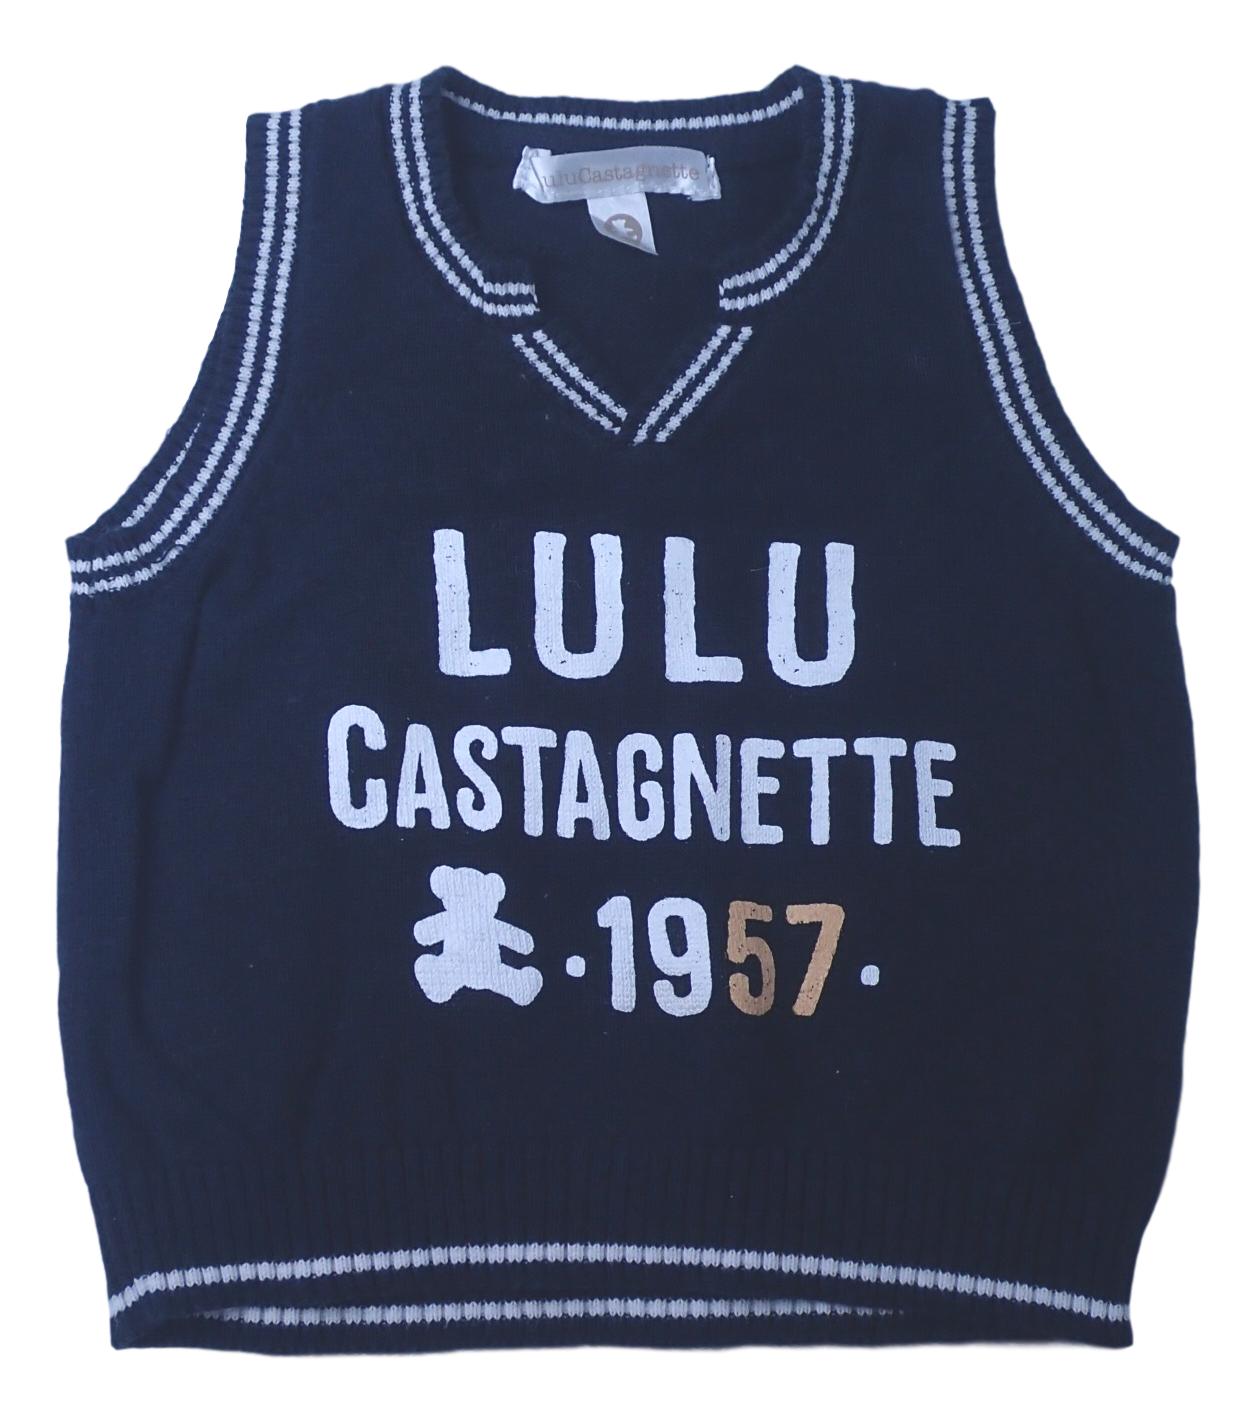 Lulu Castagnette - Taille 3 mois